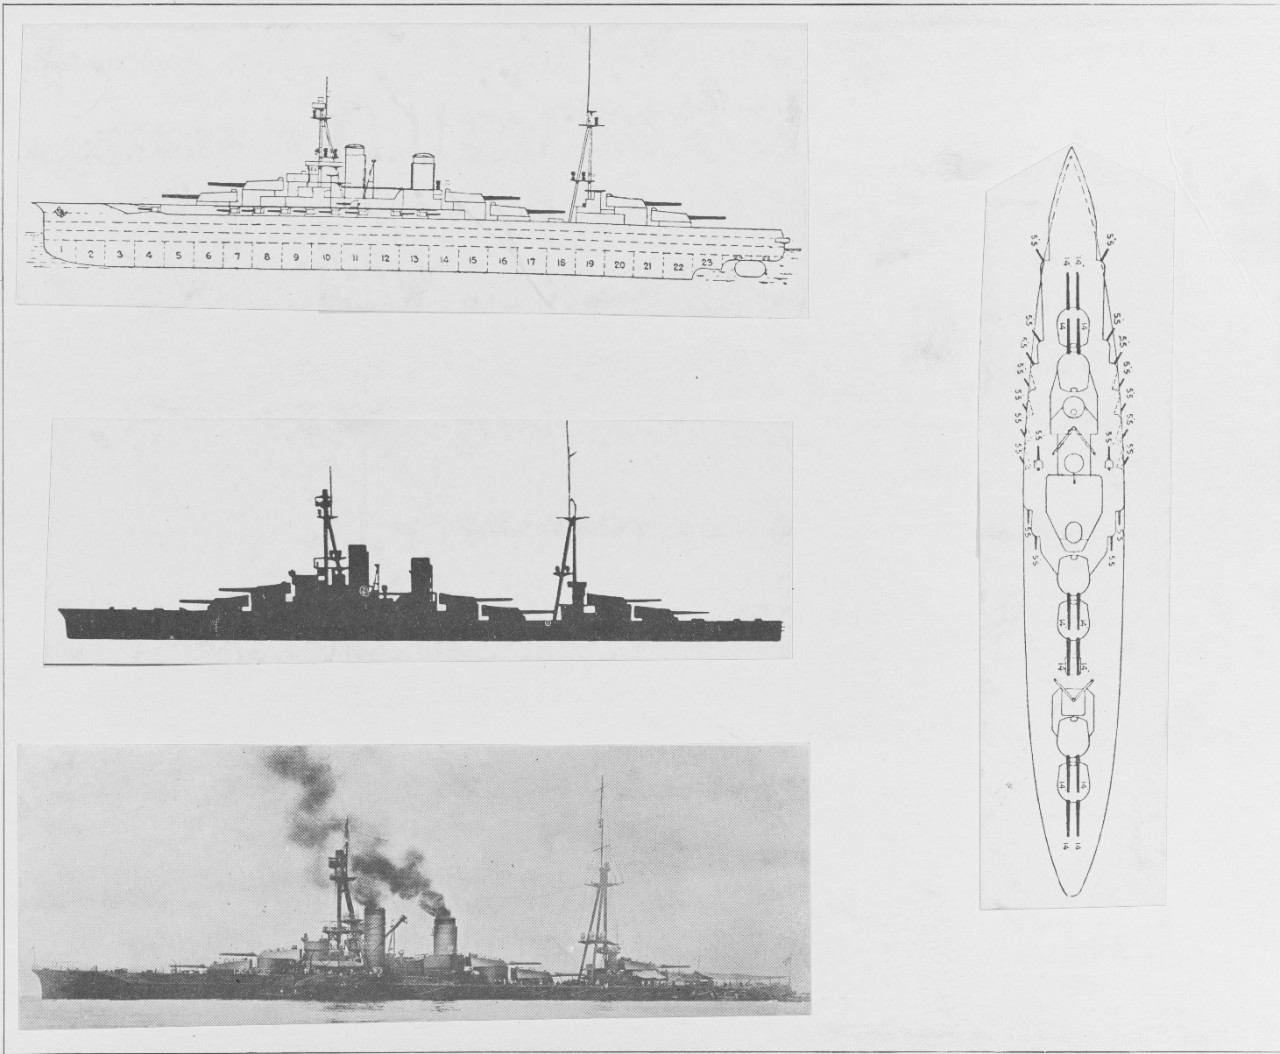 Japanese ships: H.I.J.M.S. ISE and HYUGA